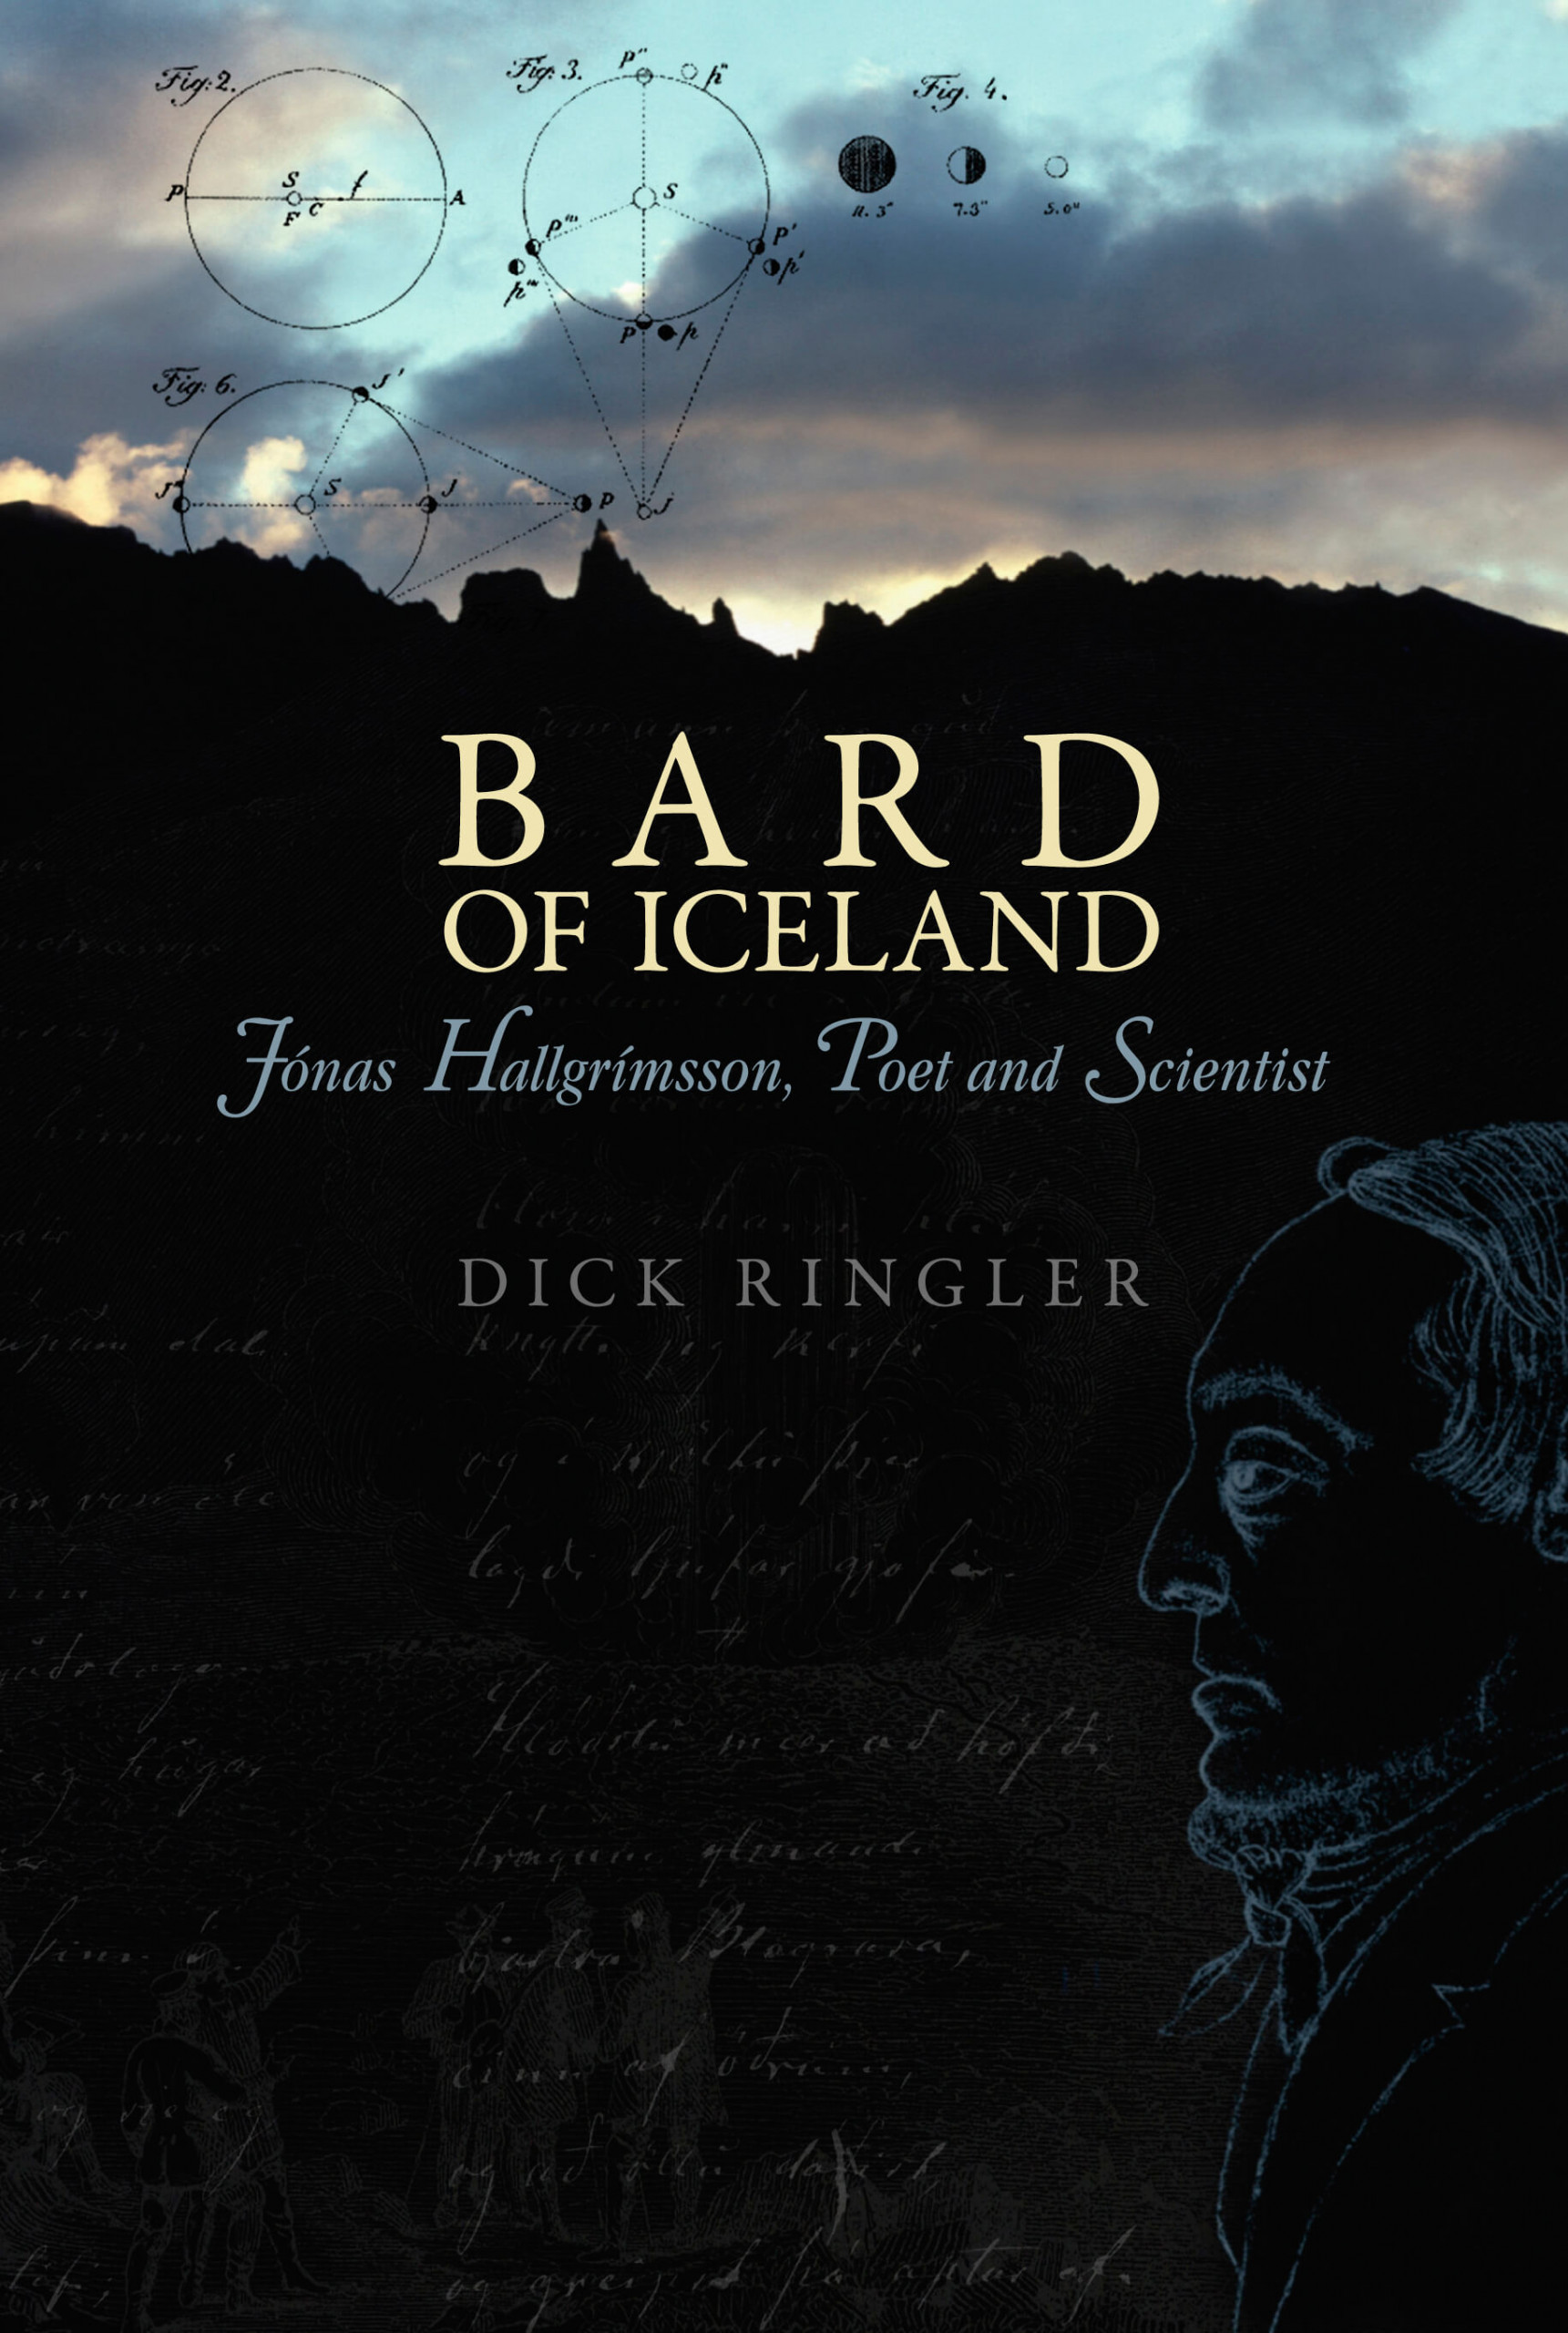 Bard of Iceland: Jónas Hallgrímsson, poet and scientist